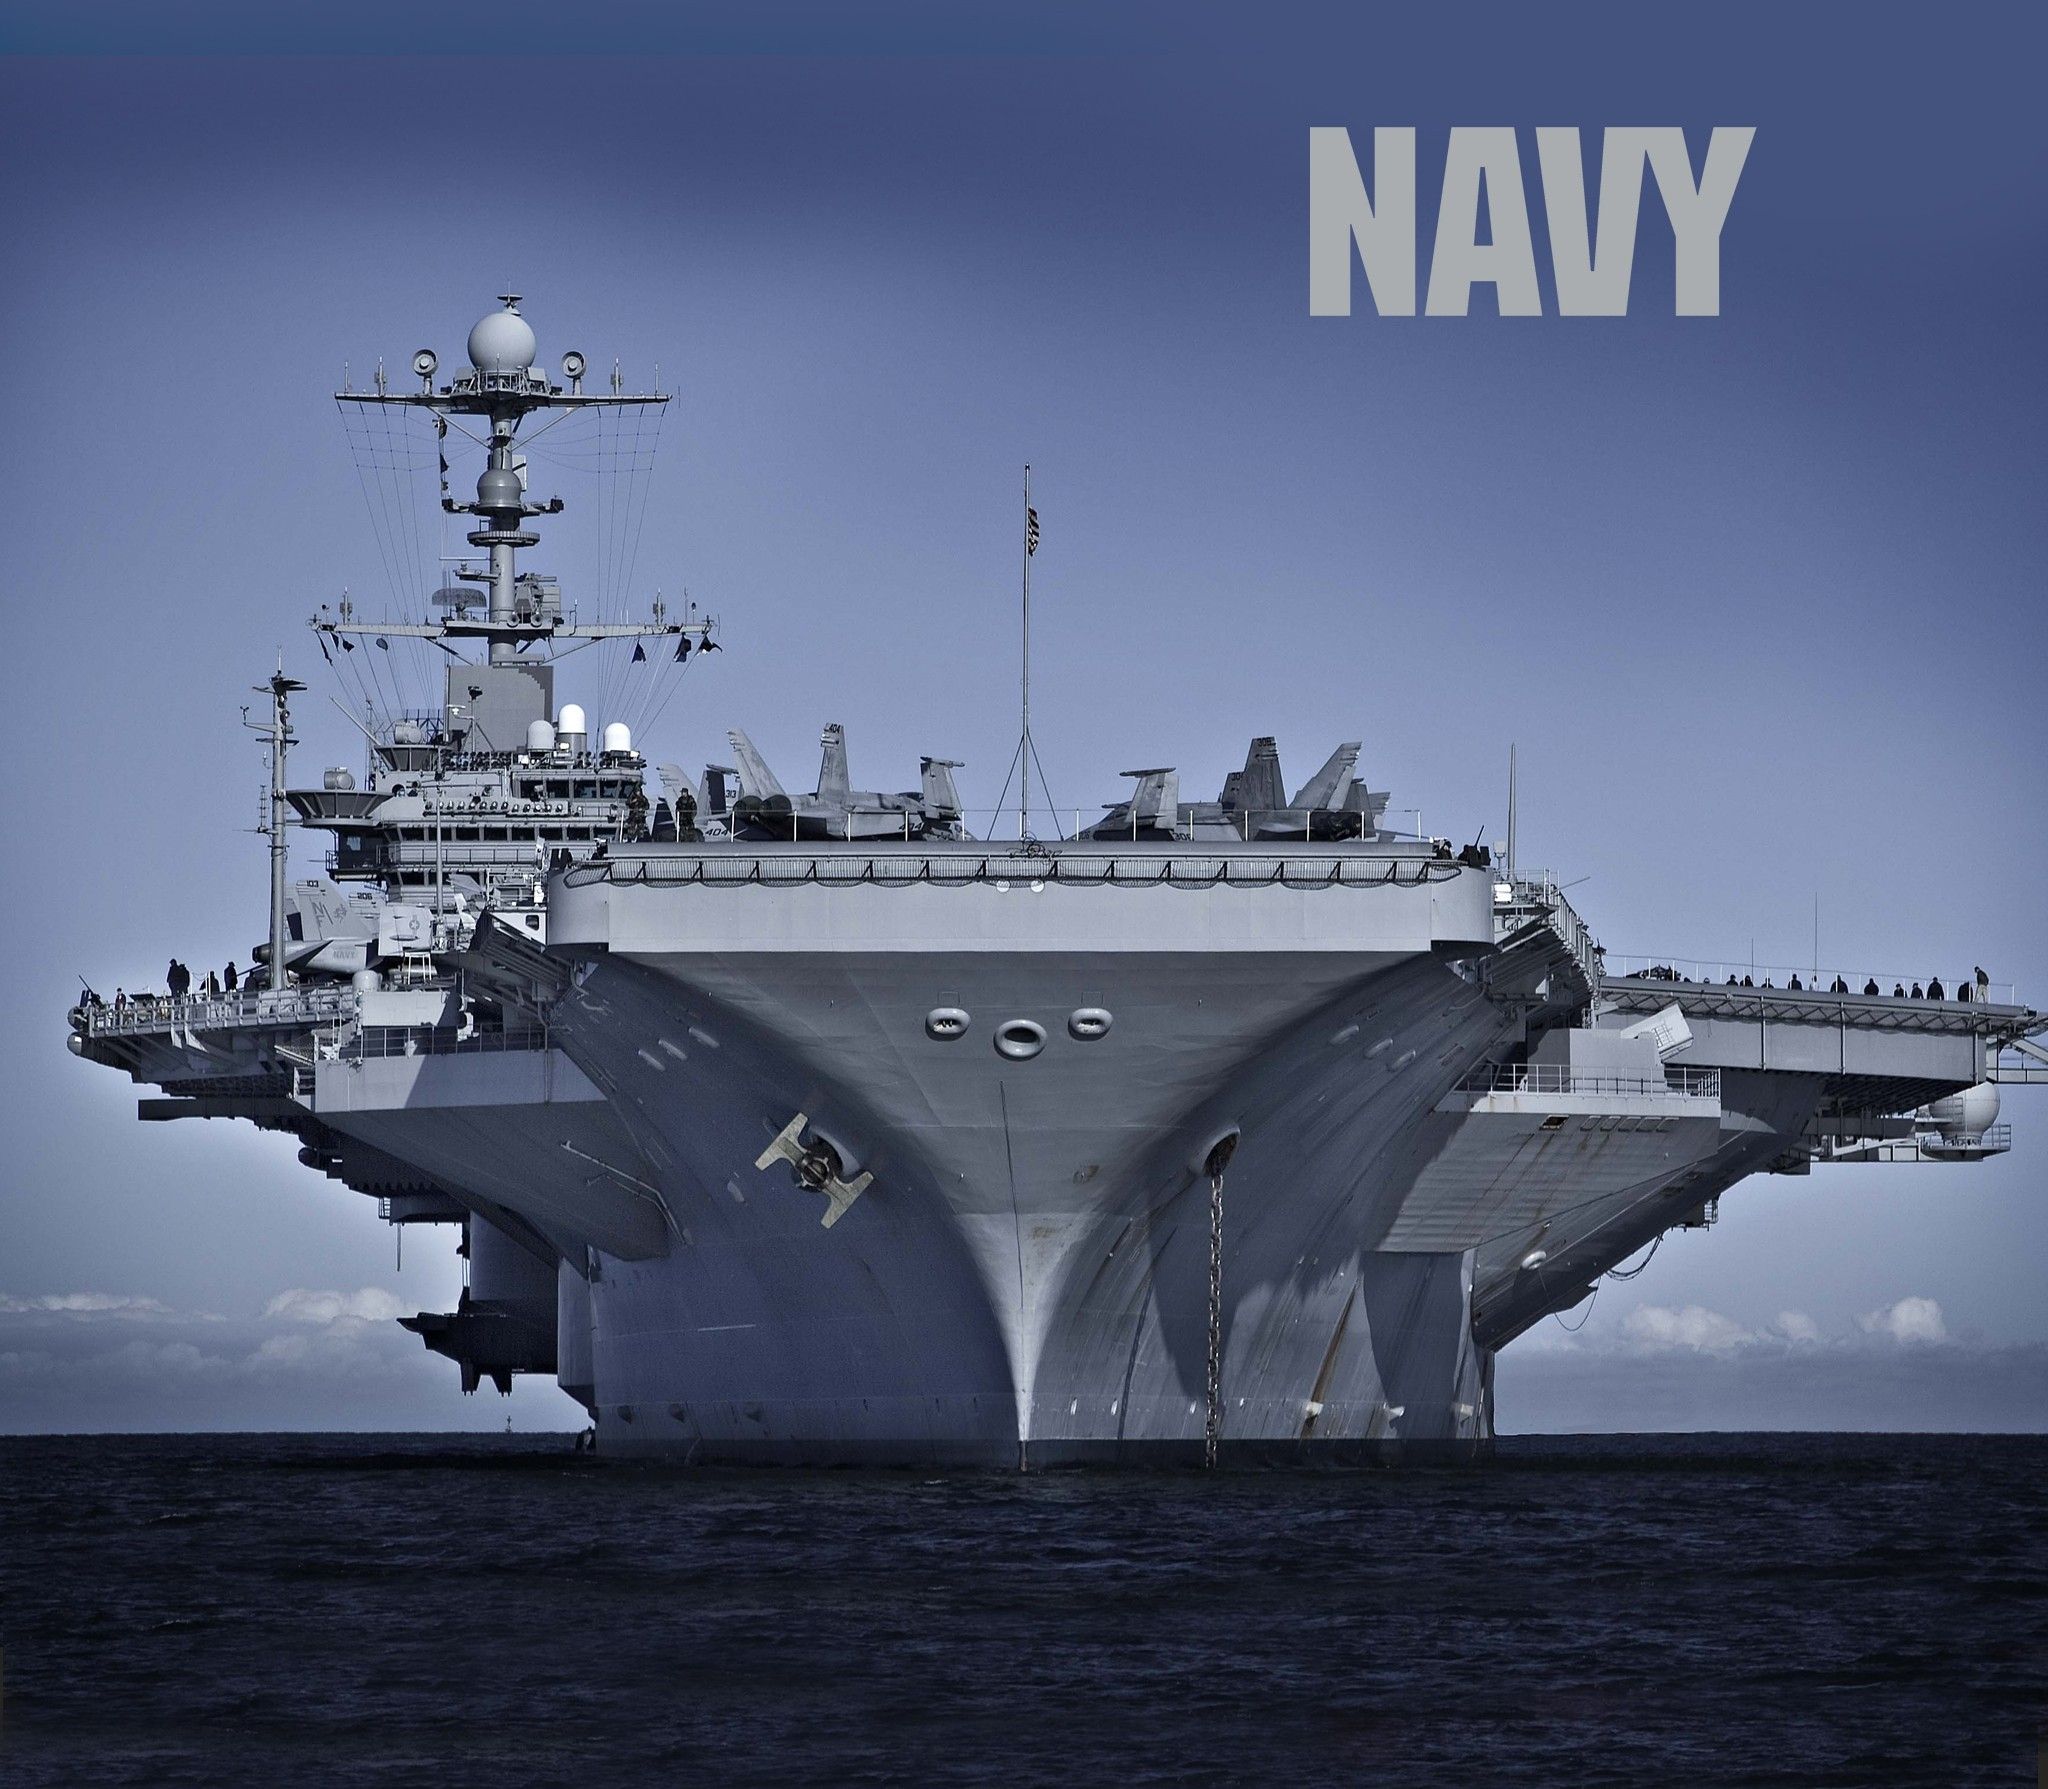 Uss george washington aircraft carrier wallpaper. Aircraft carrier, Us navy ships, Navy aircraft carrier